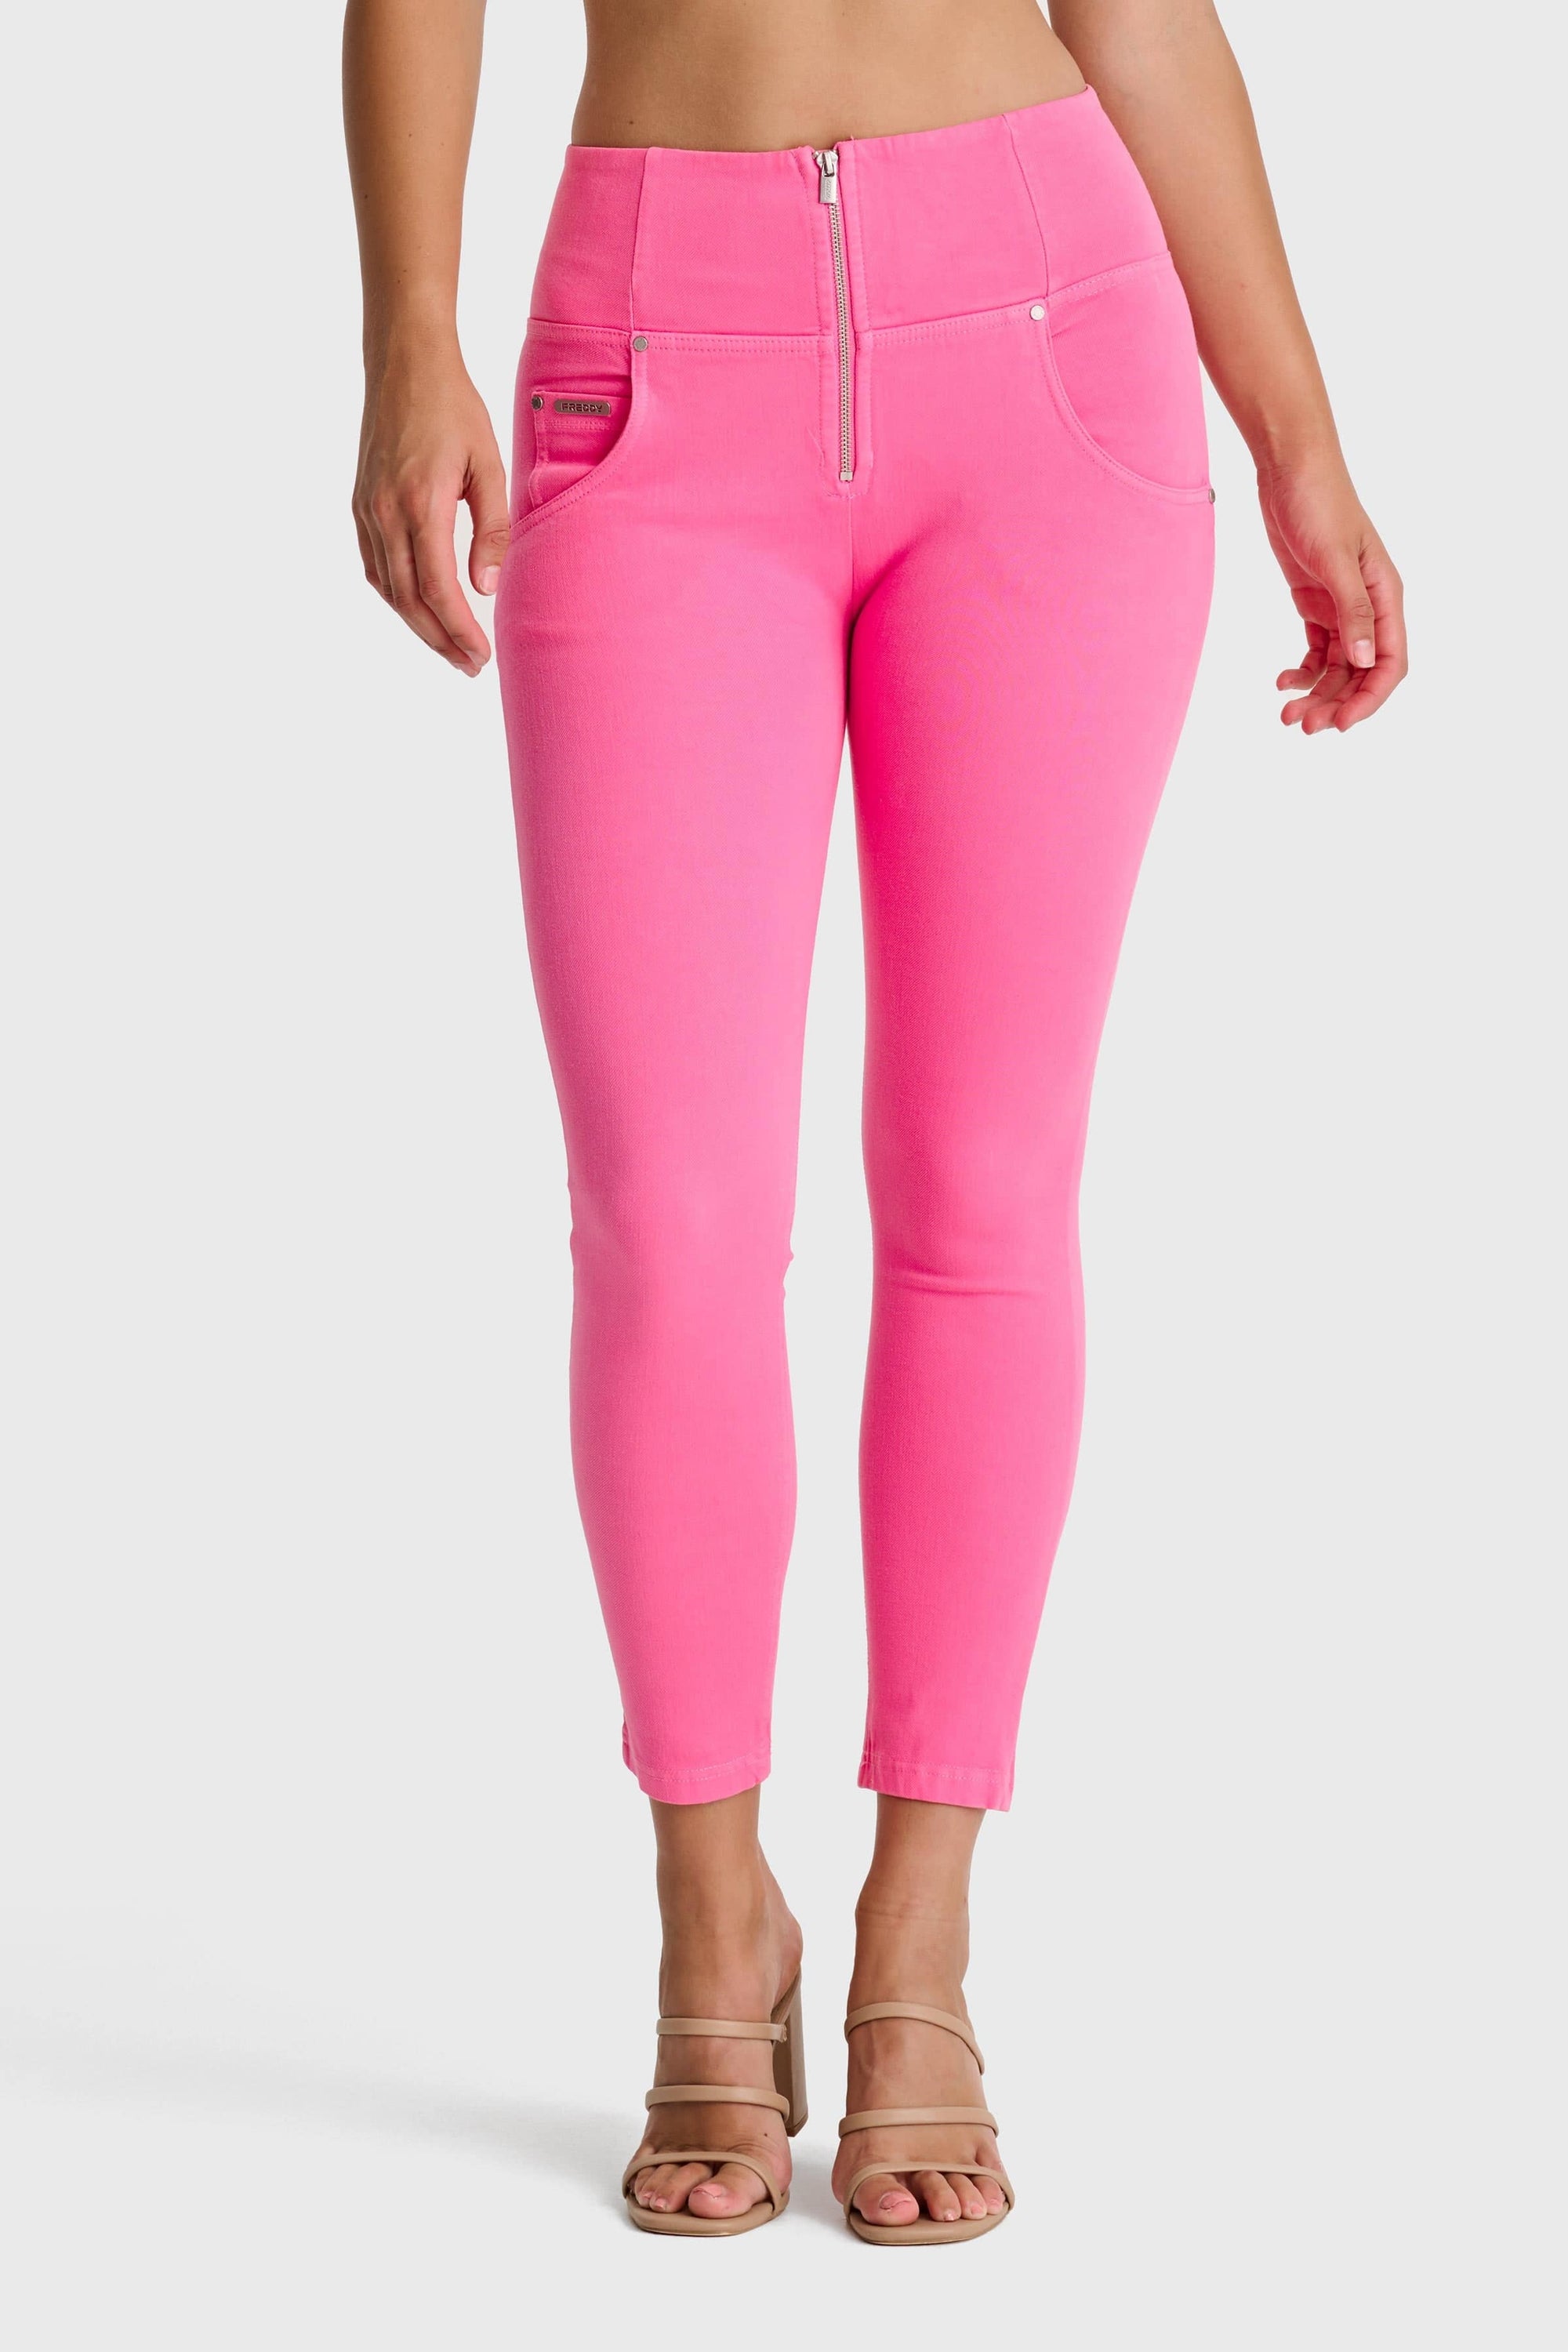 WR.UP® Snug Jeans - High Waisted - 7/8 Length - Candy Pink 5